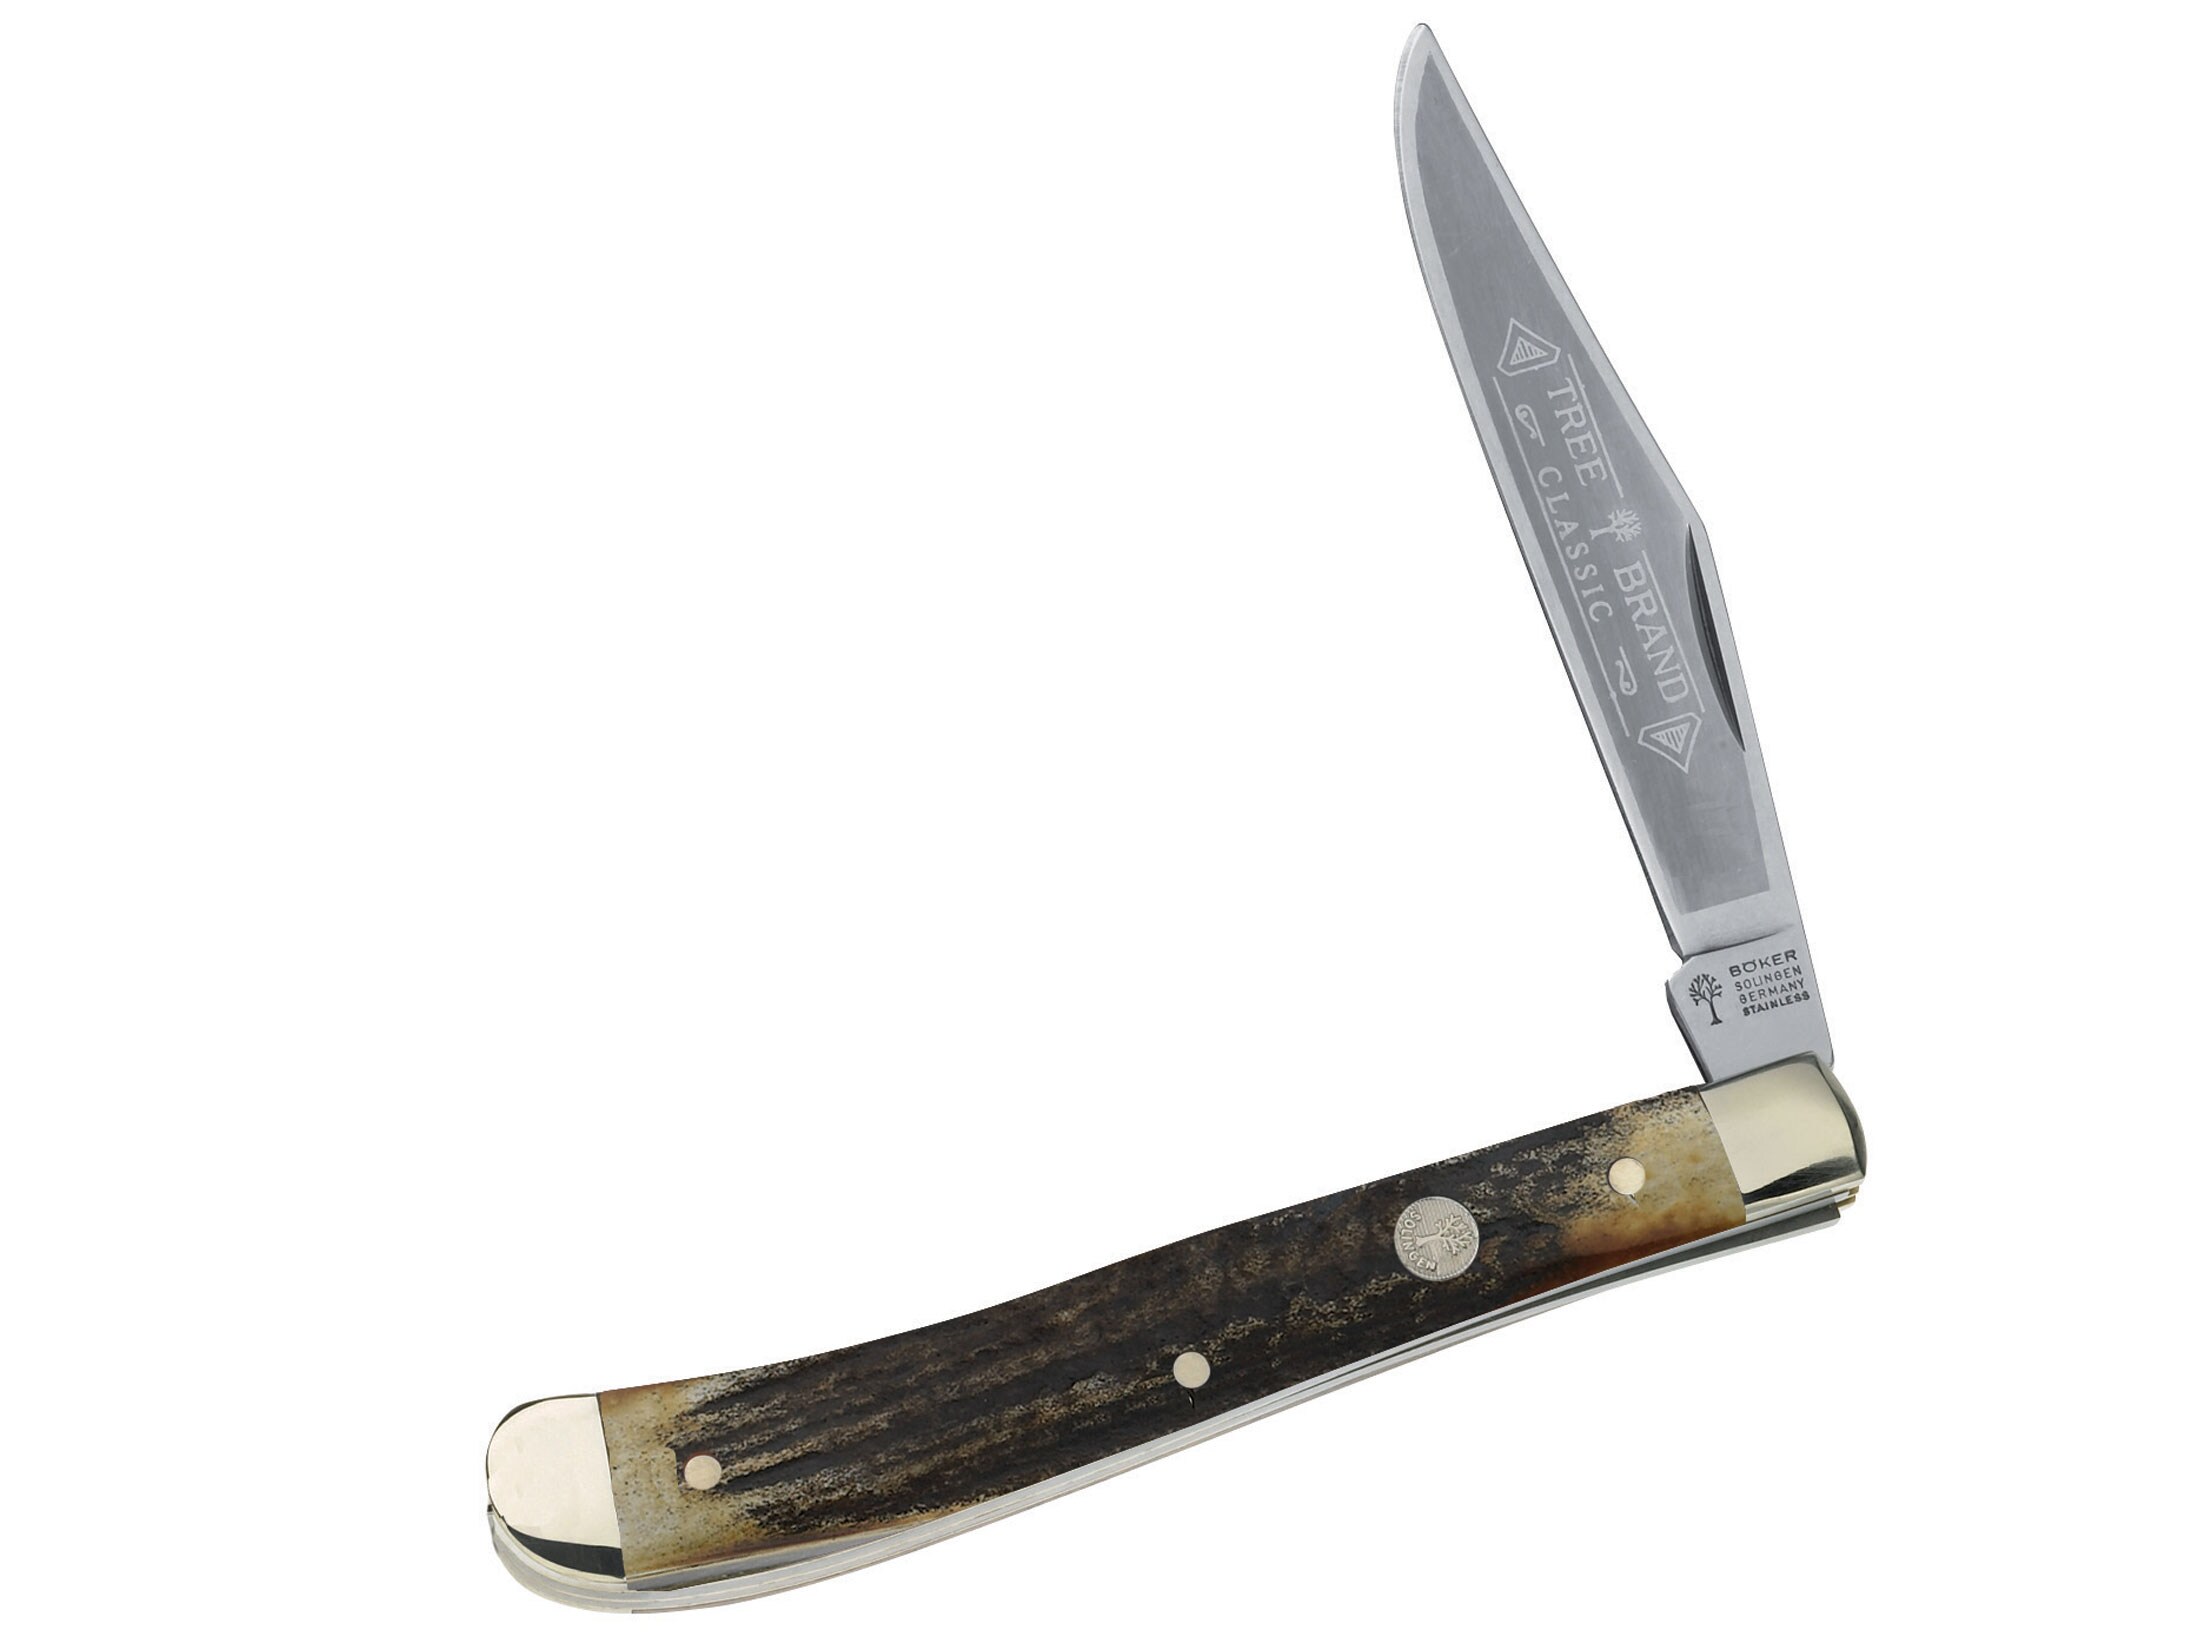 Boker “Tree Brand” Pocket Knife, 3 ½” blade, Brown grip, Box